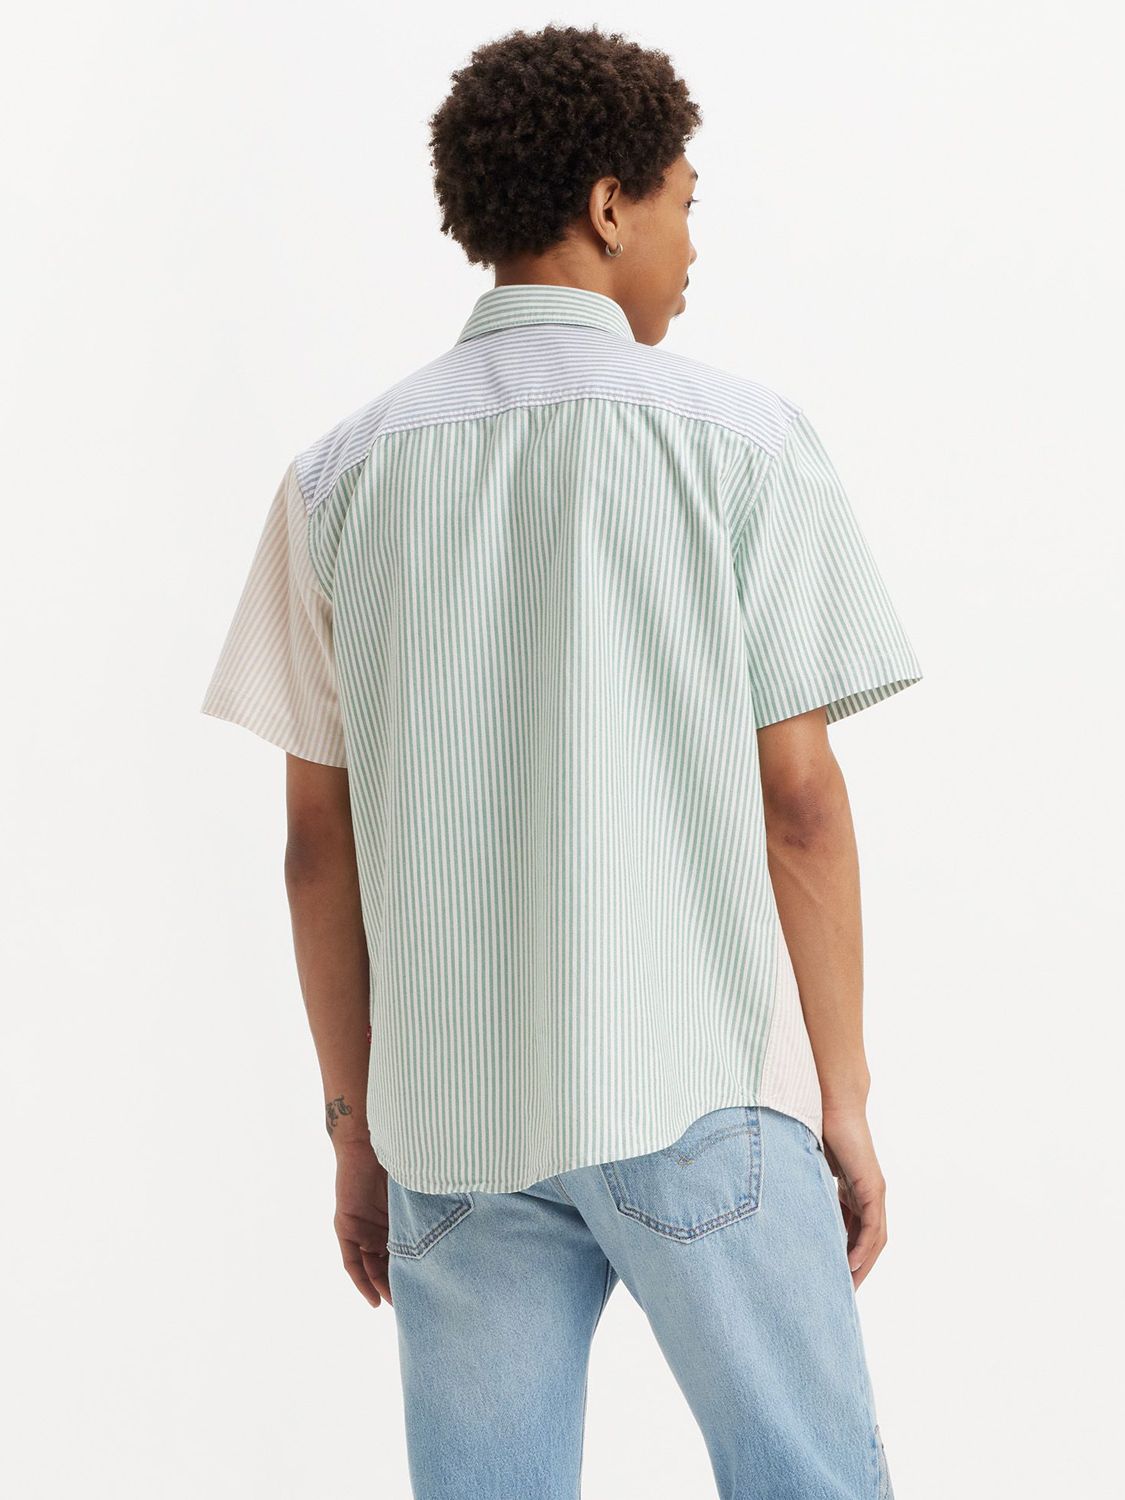 Levi's Authentic Stripe Button Down Short Sleeve Shirt, White/Multi, S